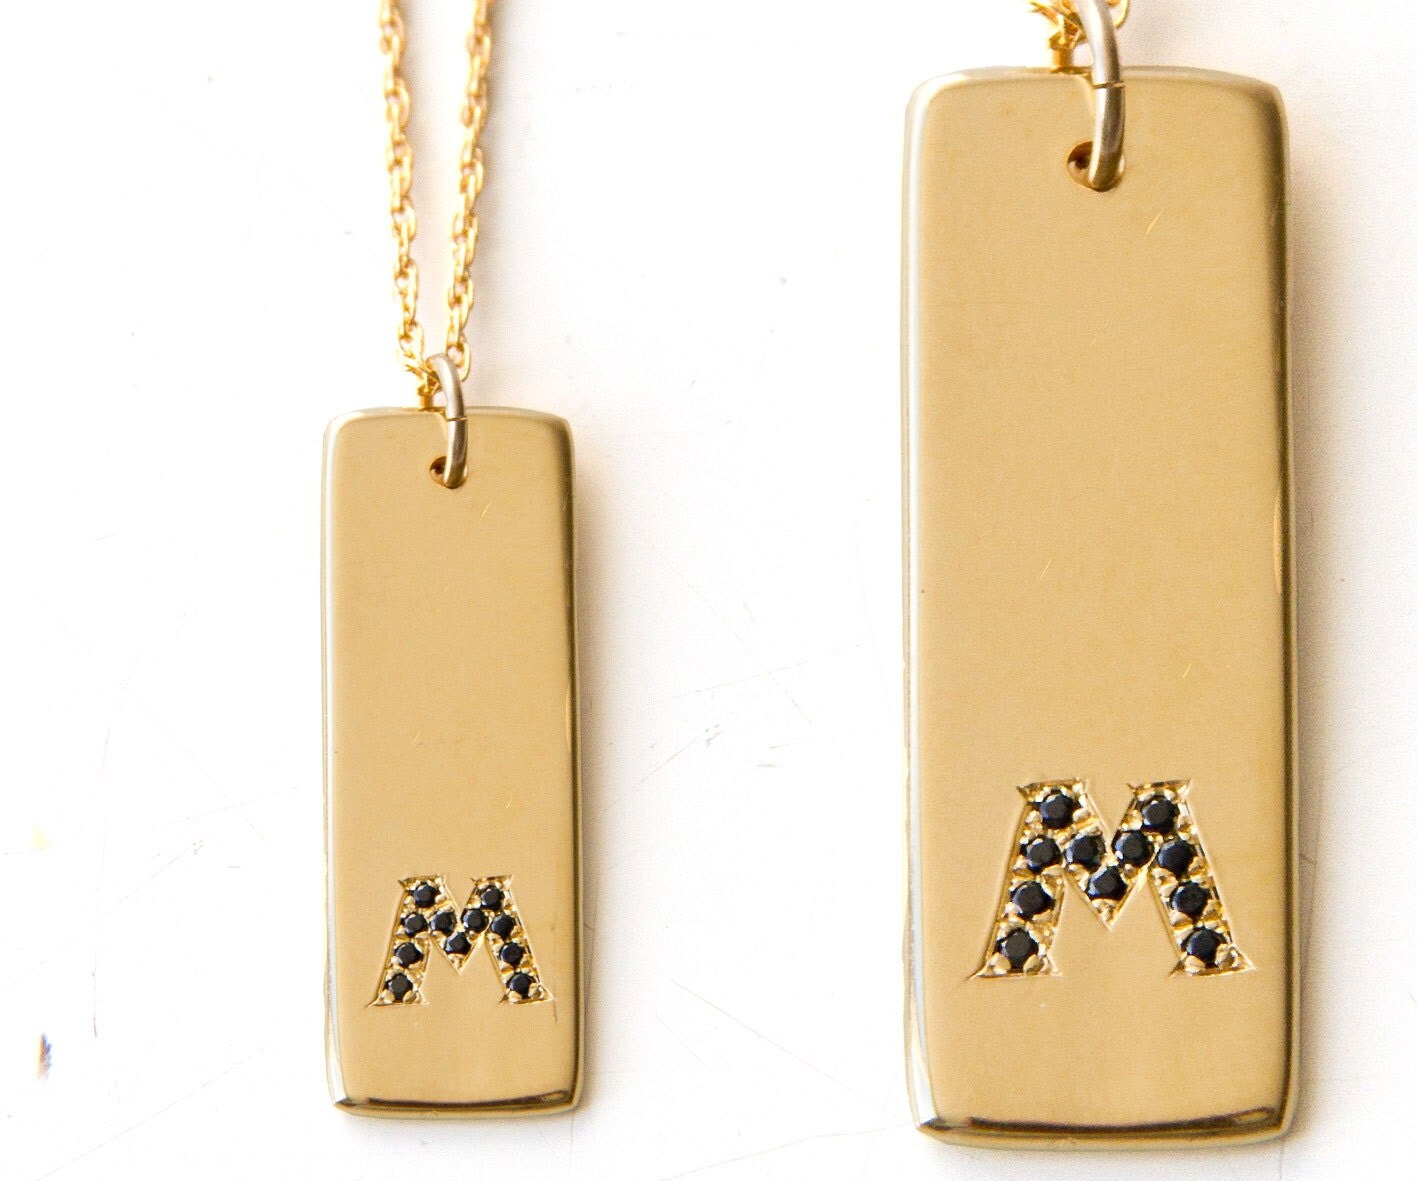 Unique Personalized Pendant Necklace, Unique Birthday gift, Black diamond Initial in Pave Set.